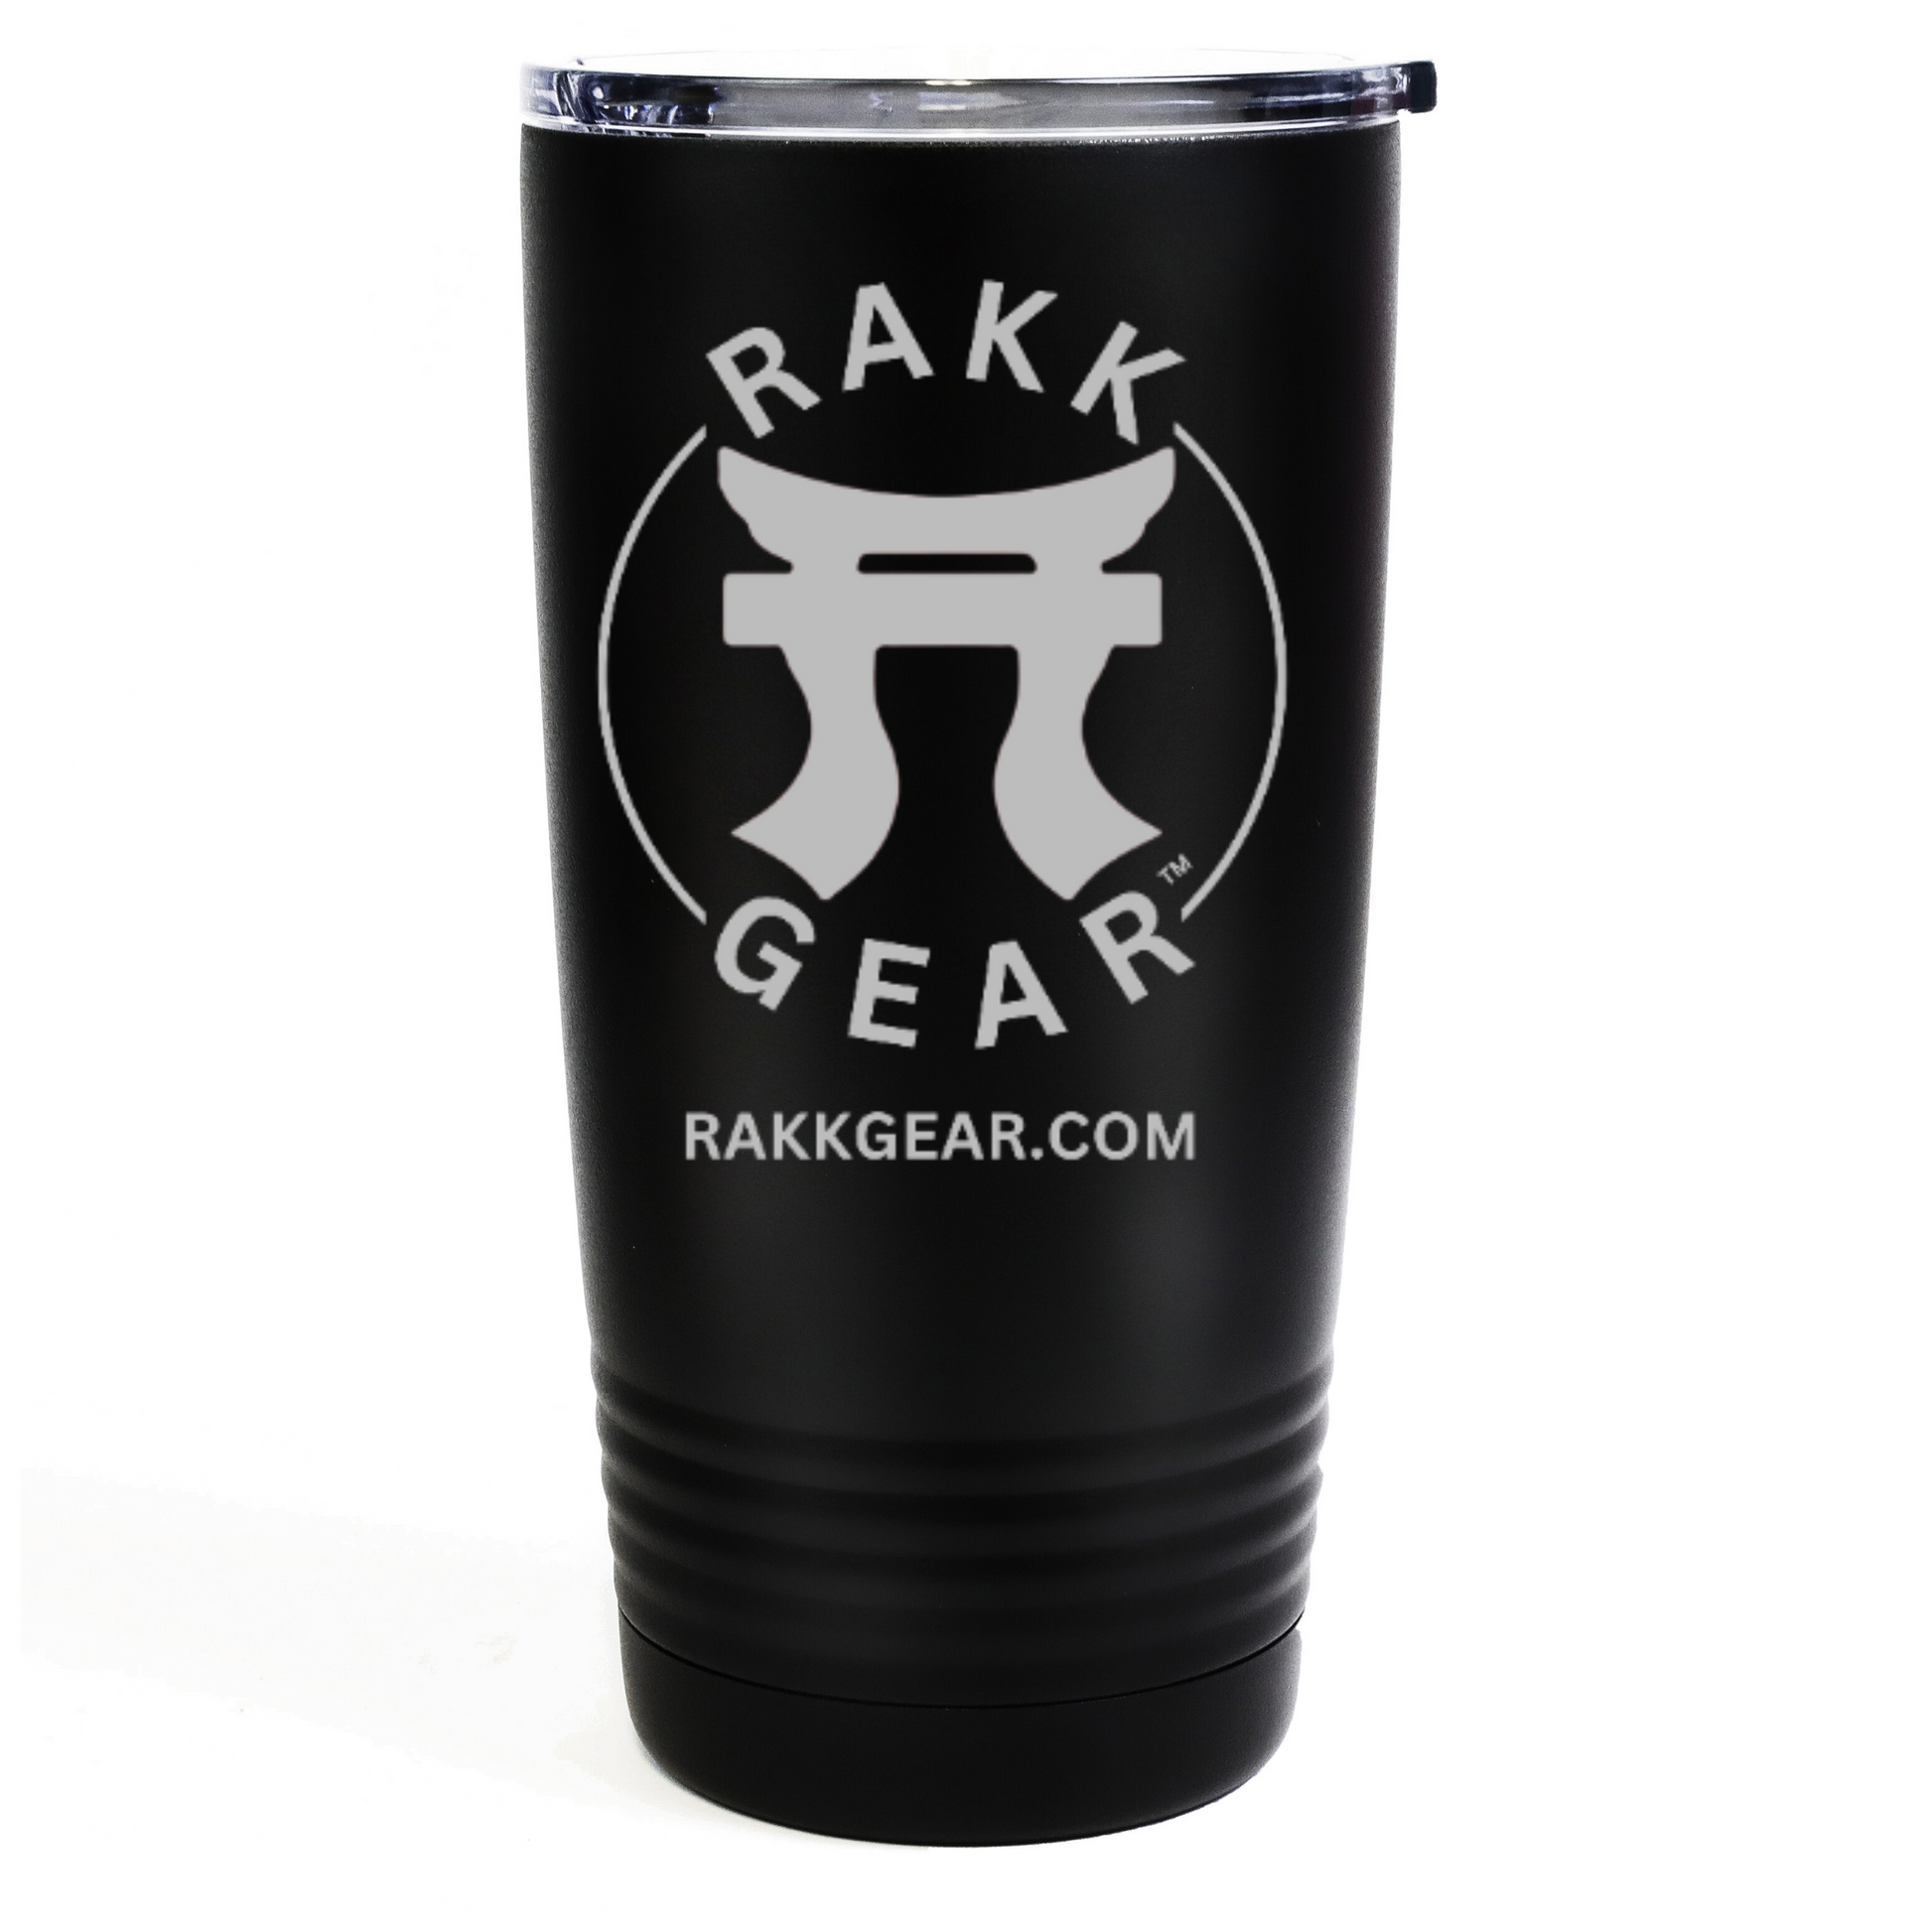 "Black Rakkgear 20oz Stainless Steel Tumbler with Laser Engraved Design."